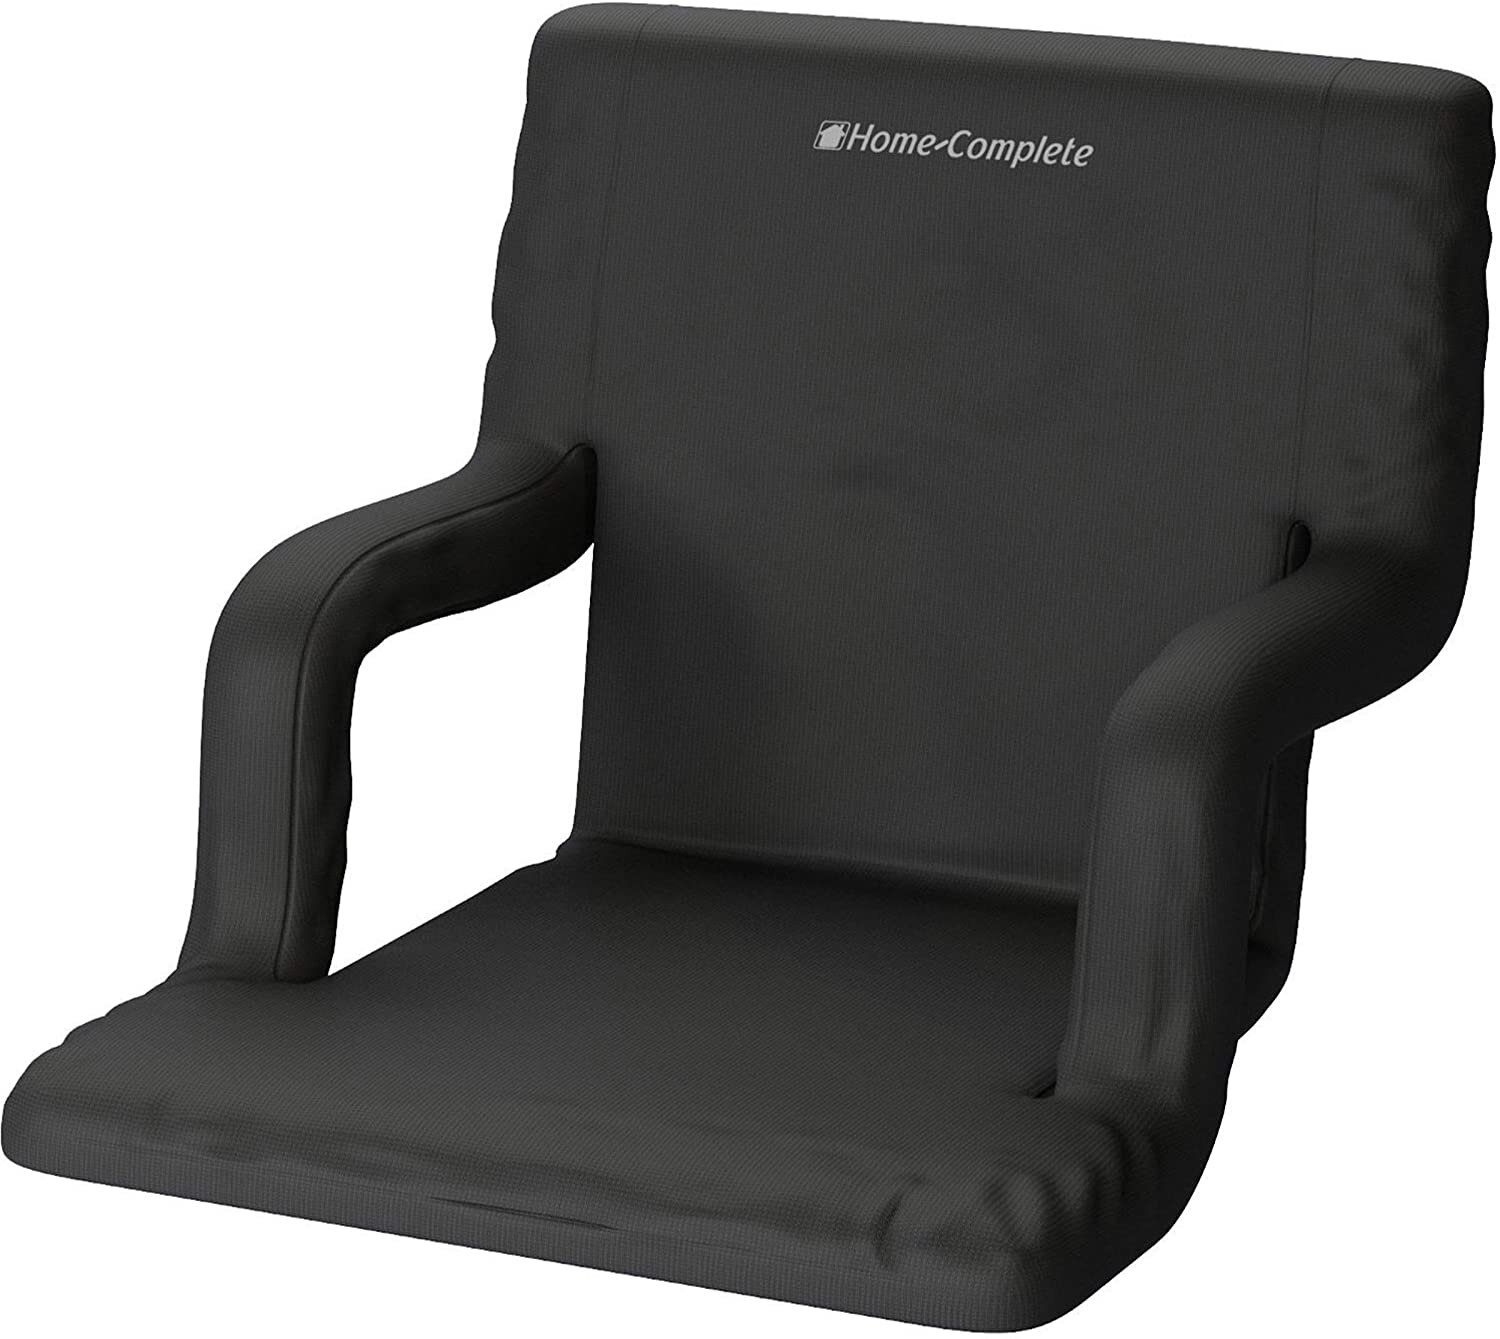 Lightweight Portable Bleacher Stadium Seats Chair Cushion with Pad Backrest 